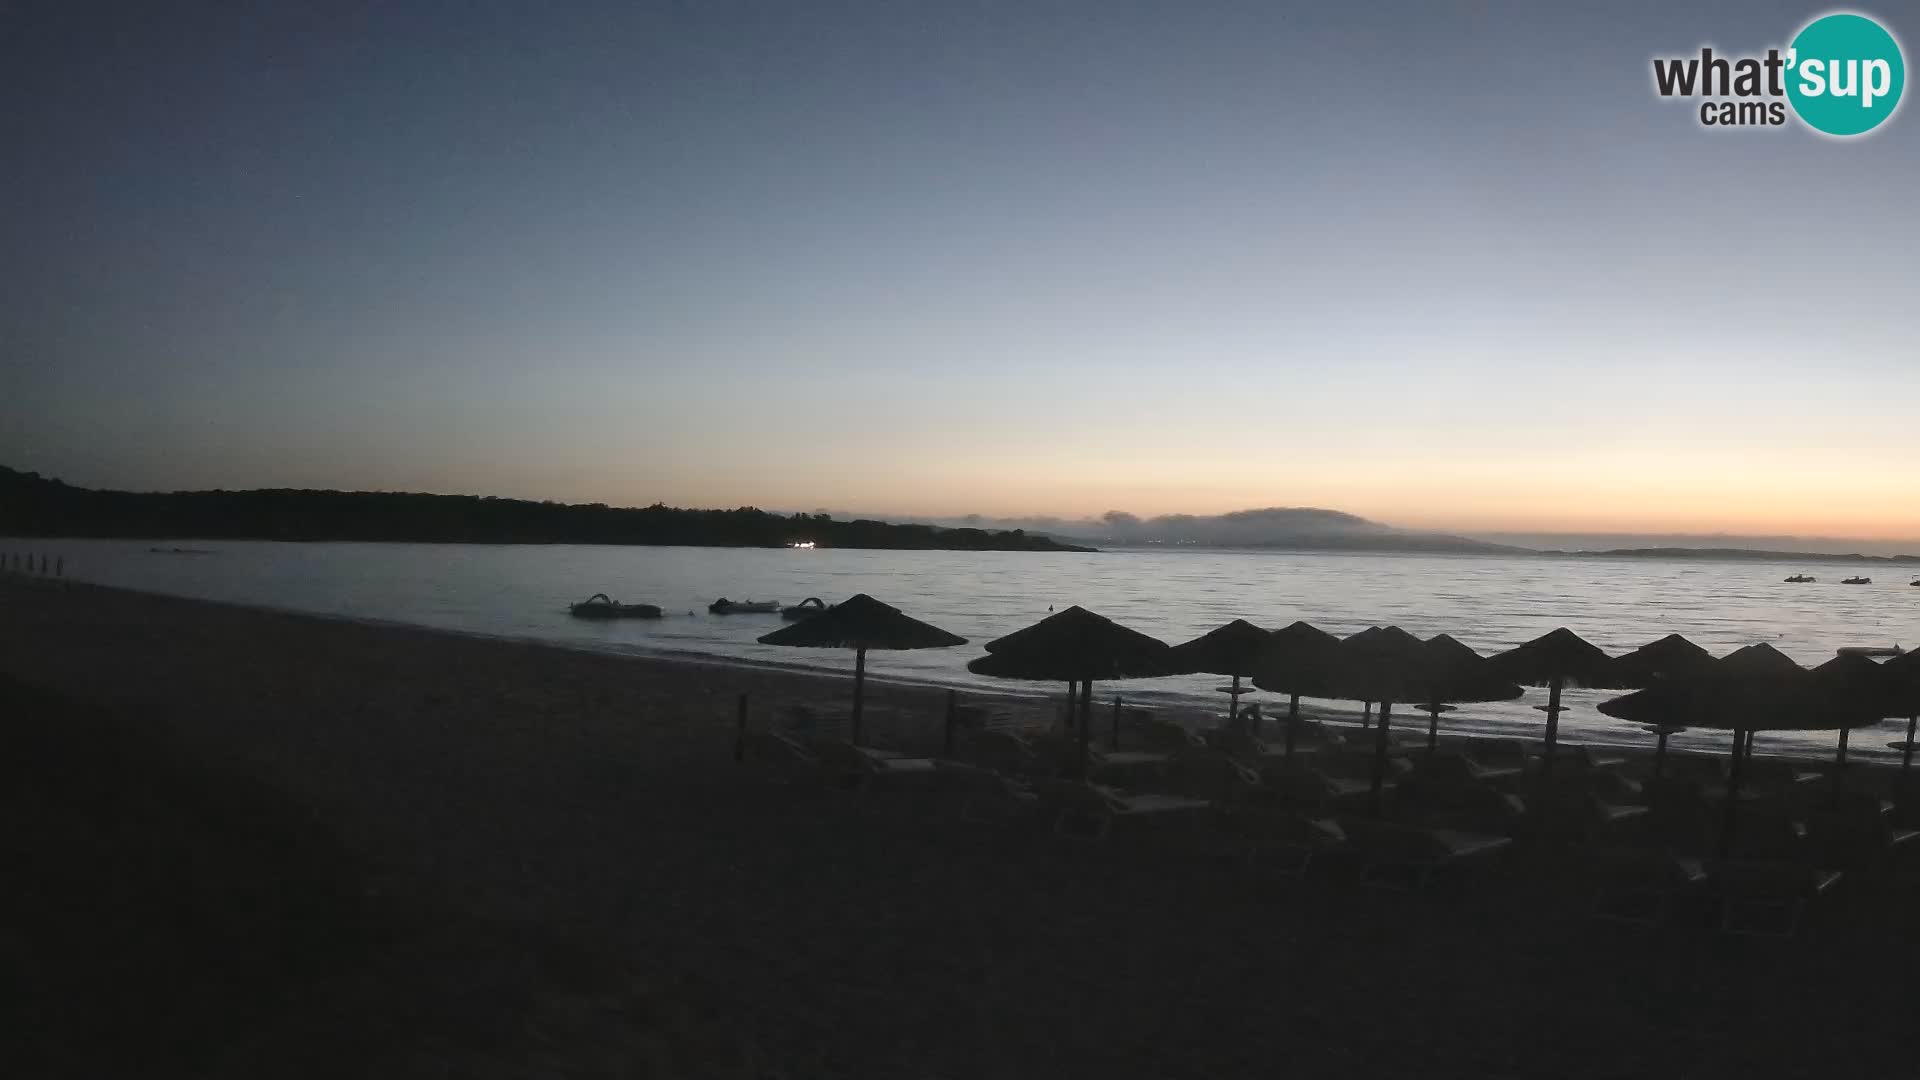 Mannena beach webcam – Arzachena – Sardinia